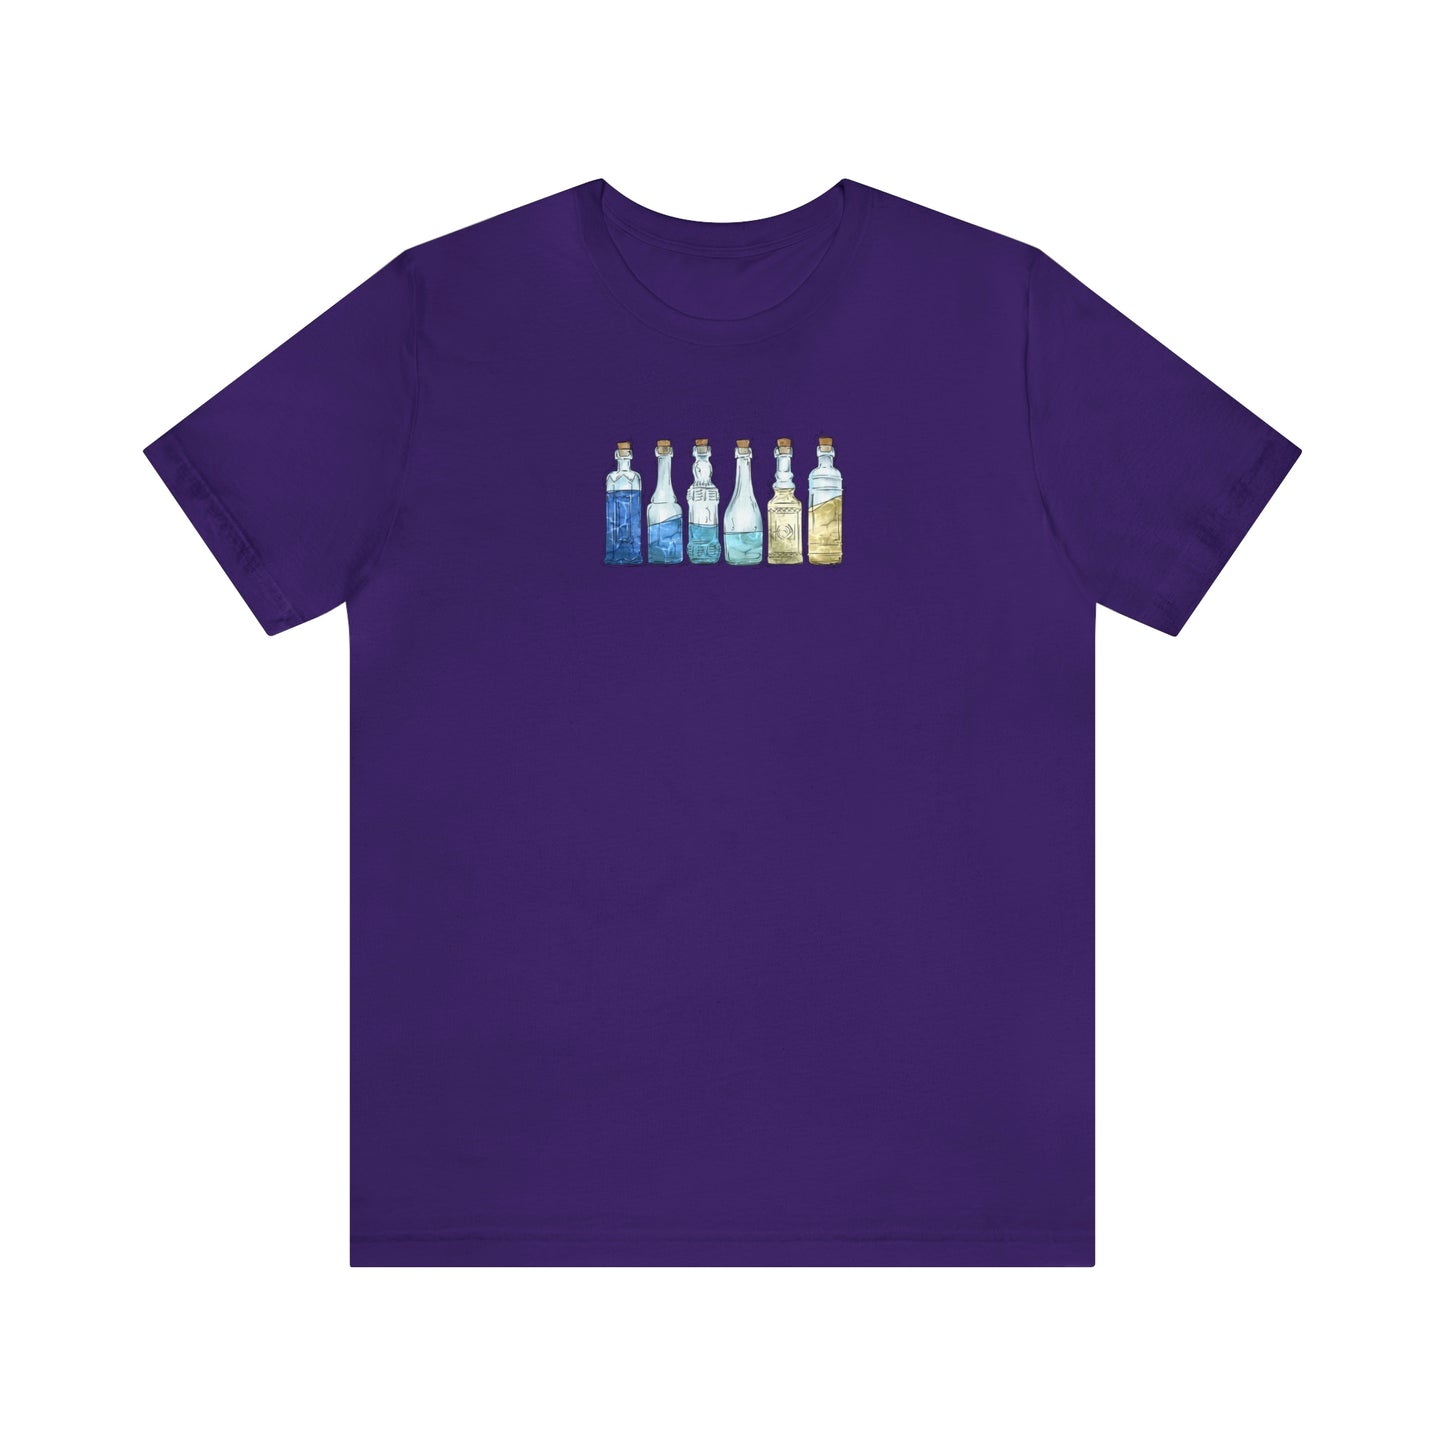 Uranic Pride Potion Bottles - Unisex T-Shirt